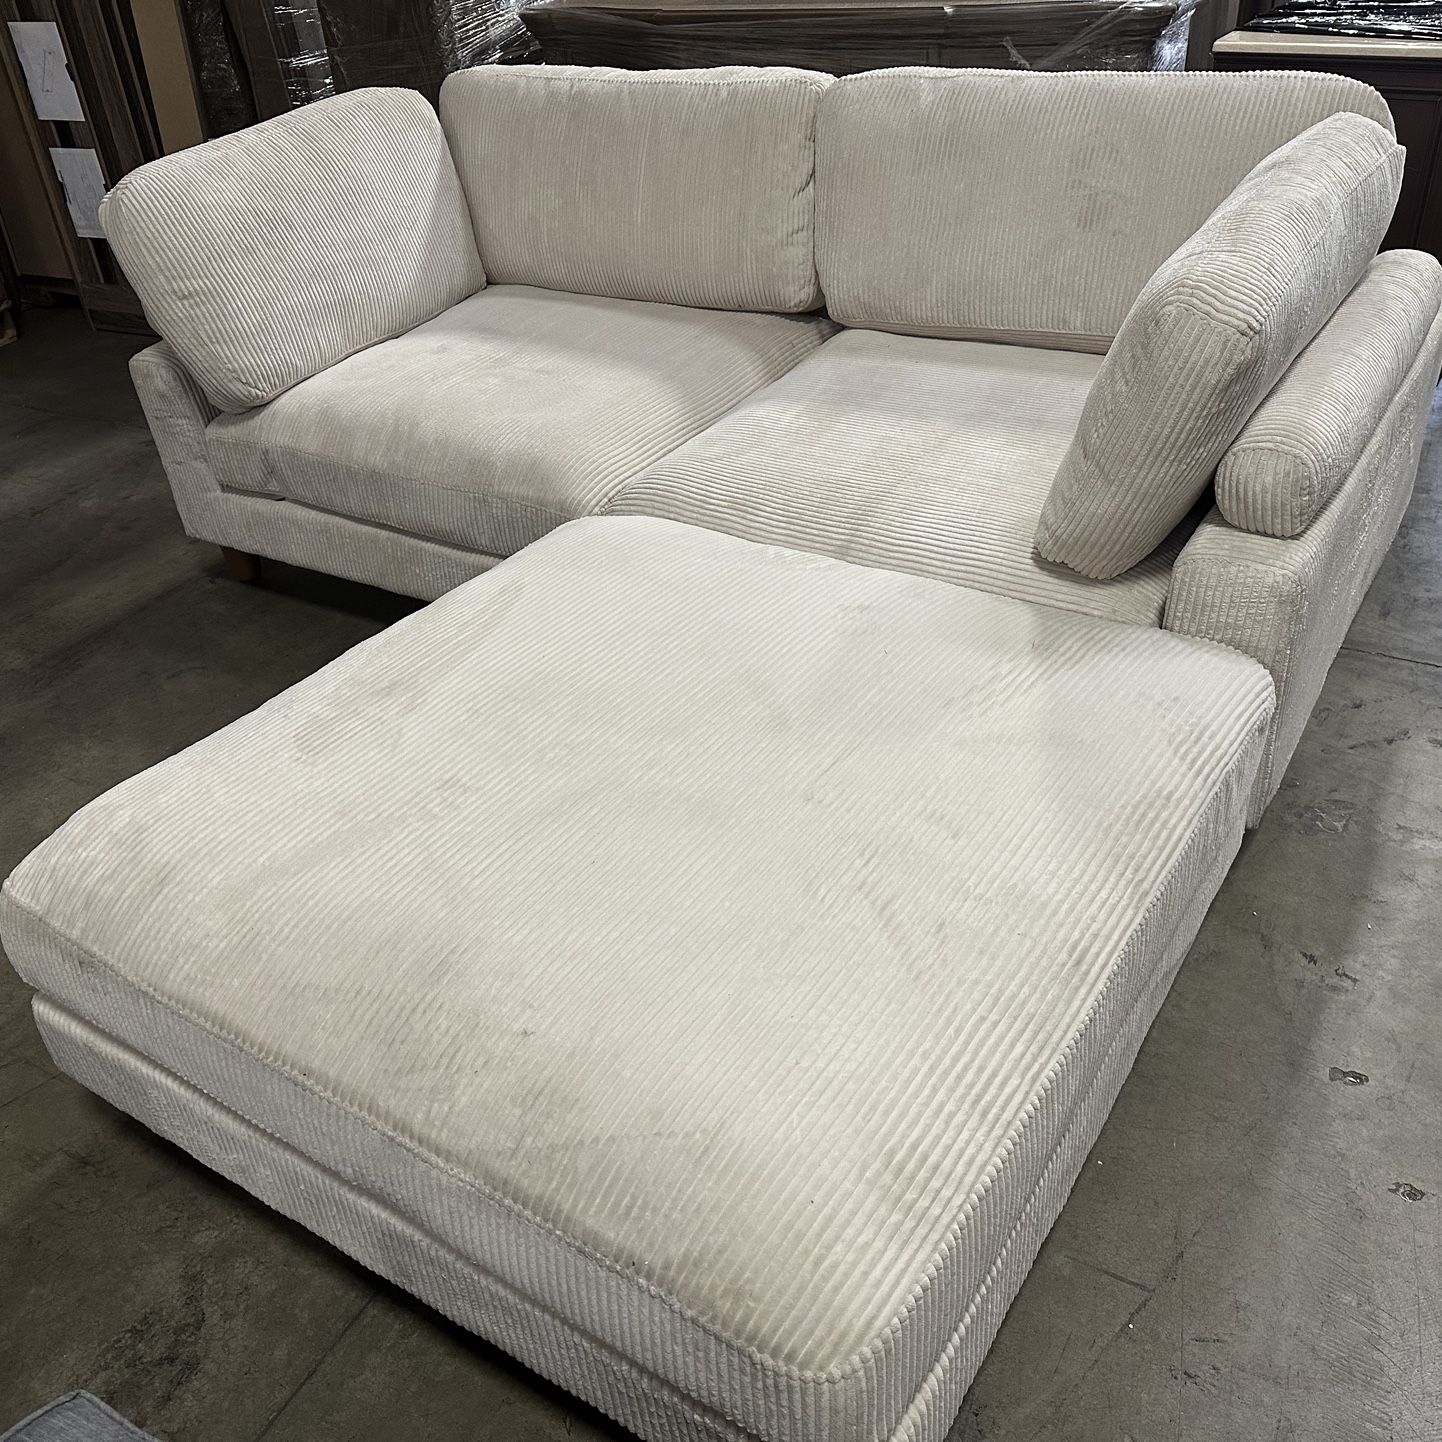 Small Sectional Sofa :$350